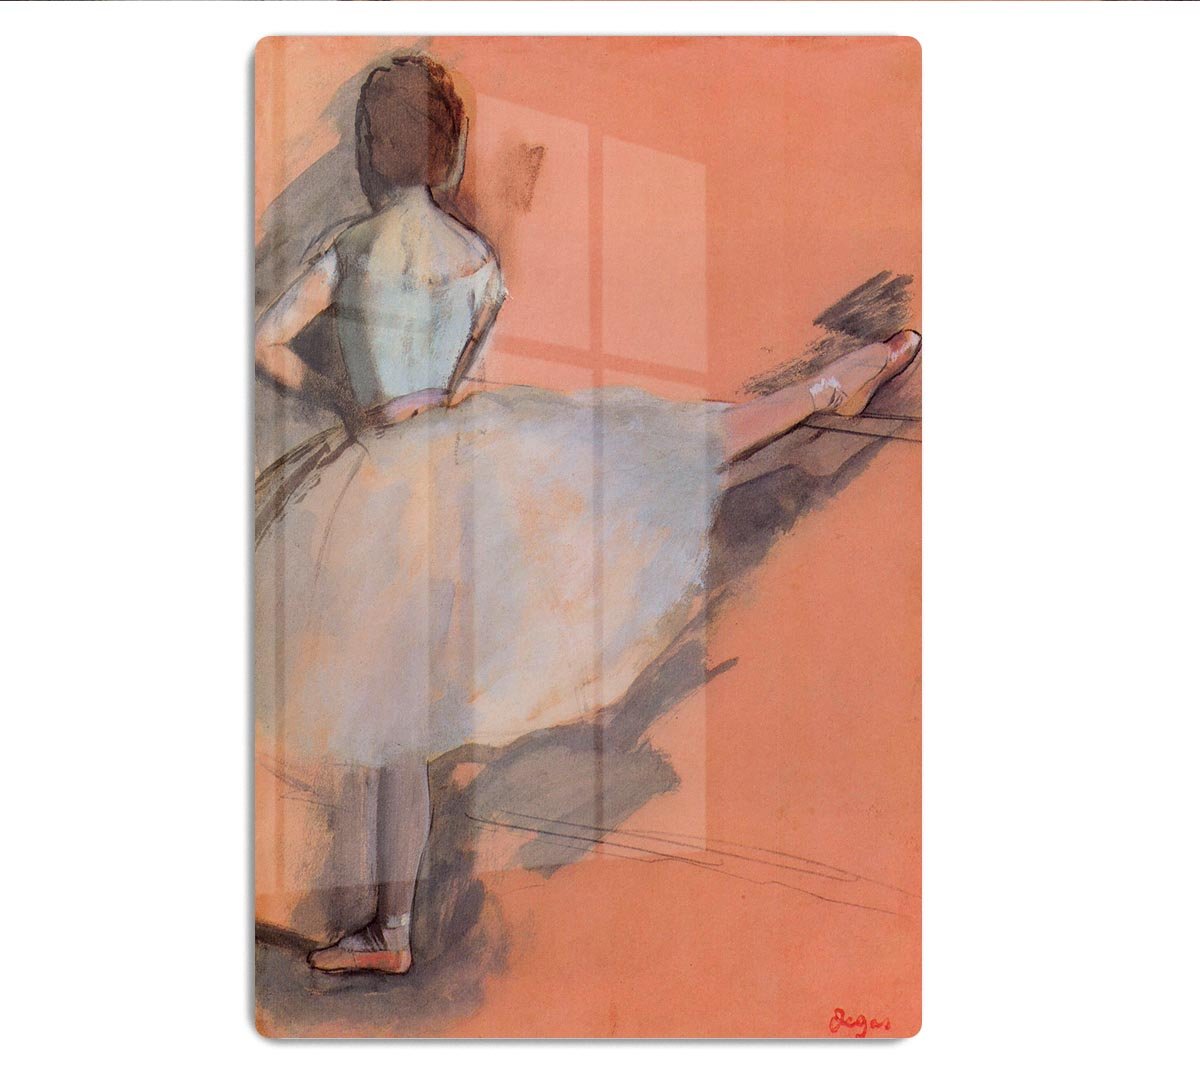 Dancer at the bar 1 by Degas HD Metal Print - Canvas Art Rocks - 1